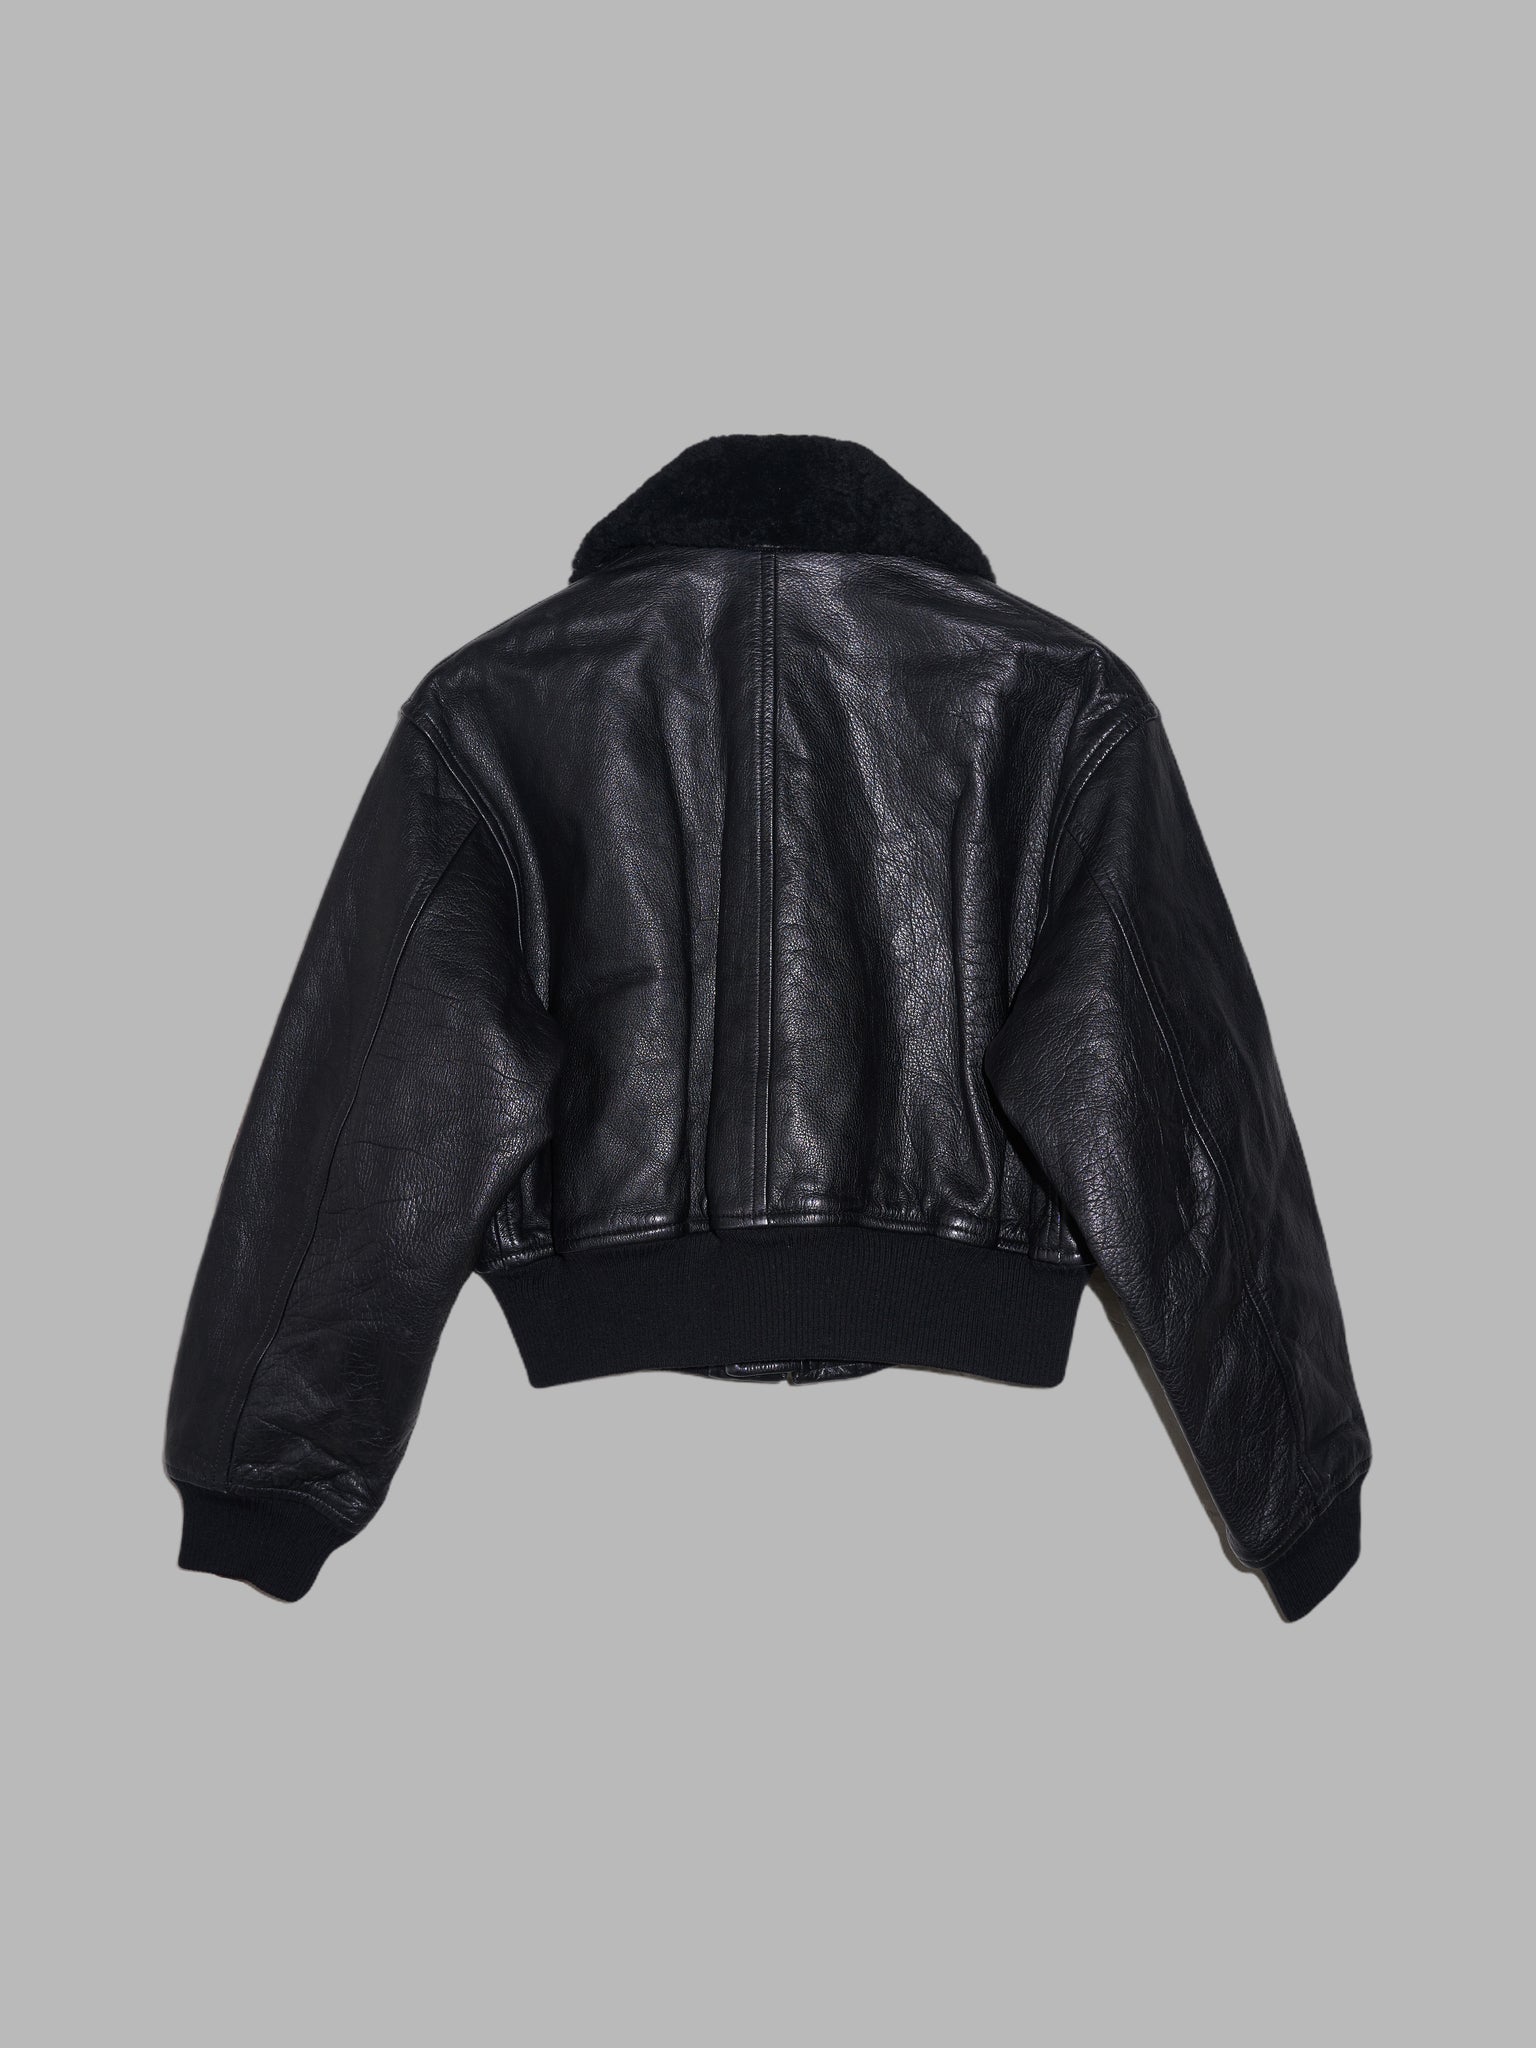 Tricot Comme des Garcons AW1989 black leather detachable collar bomber jacket